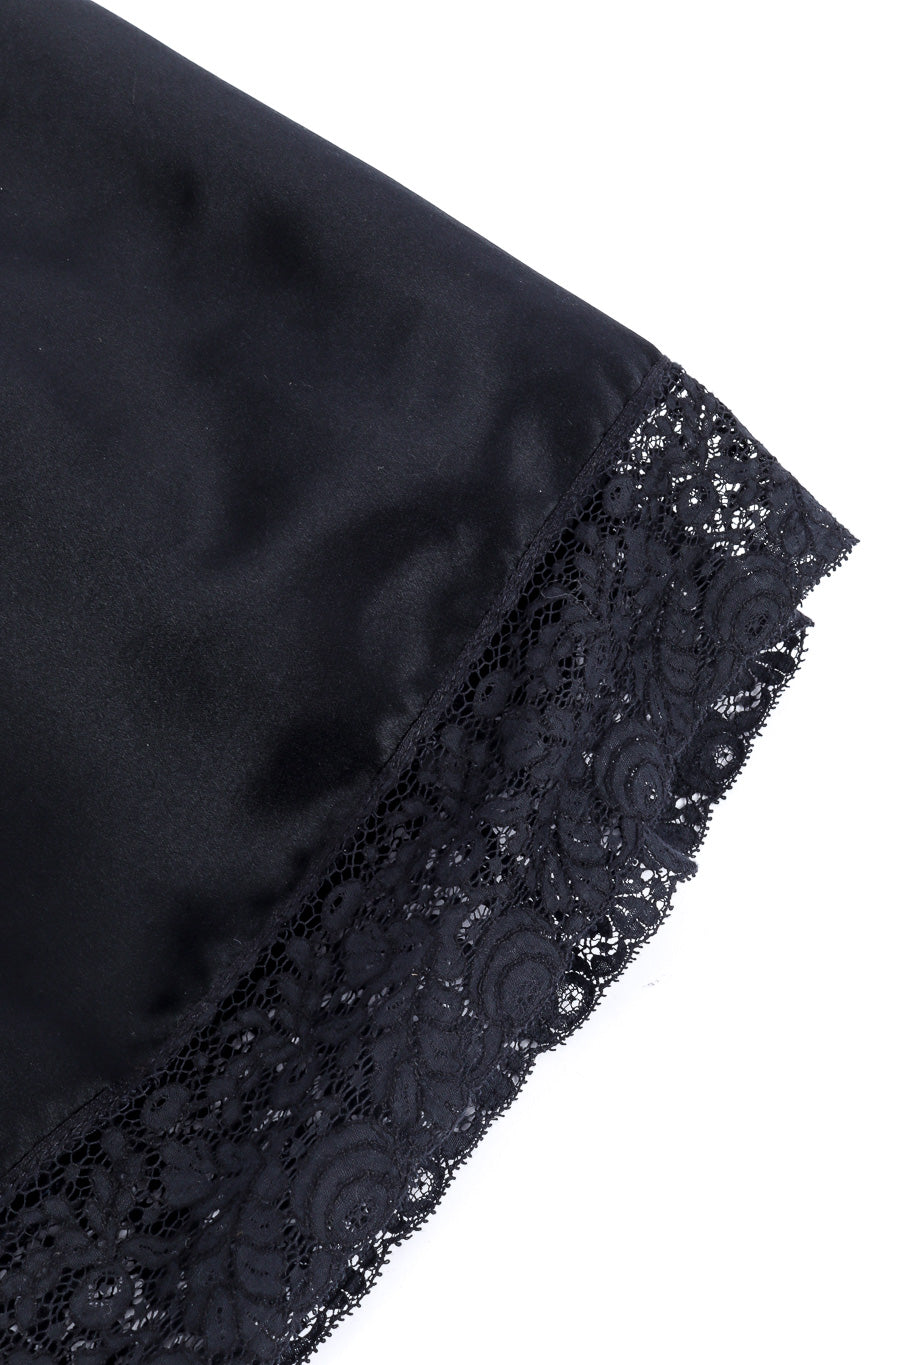 Valentino ruffle lace tiered skirt lace hem detail @recessla